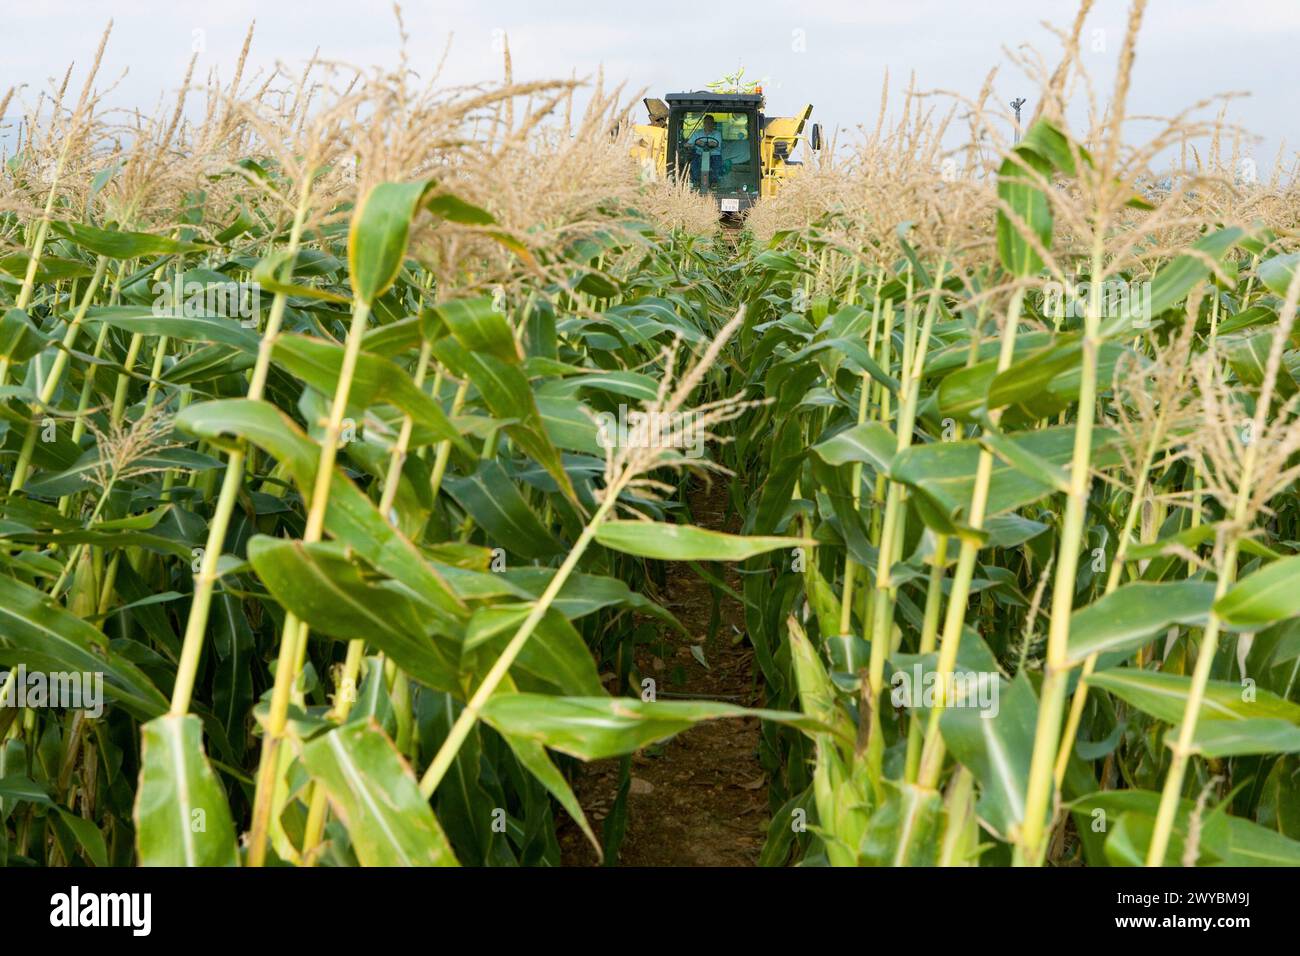 Corn harvesting, Oco near Estella. Navarra, Spain. Stock Photo